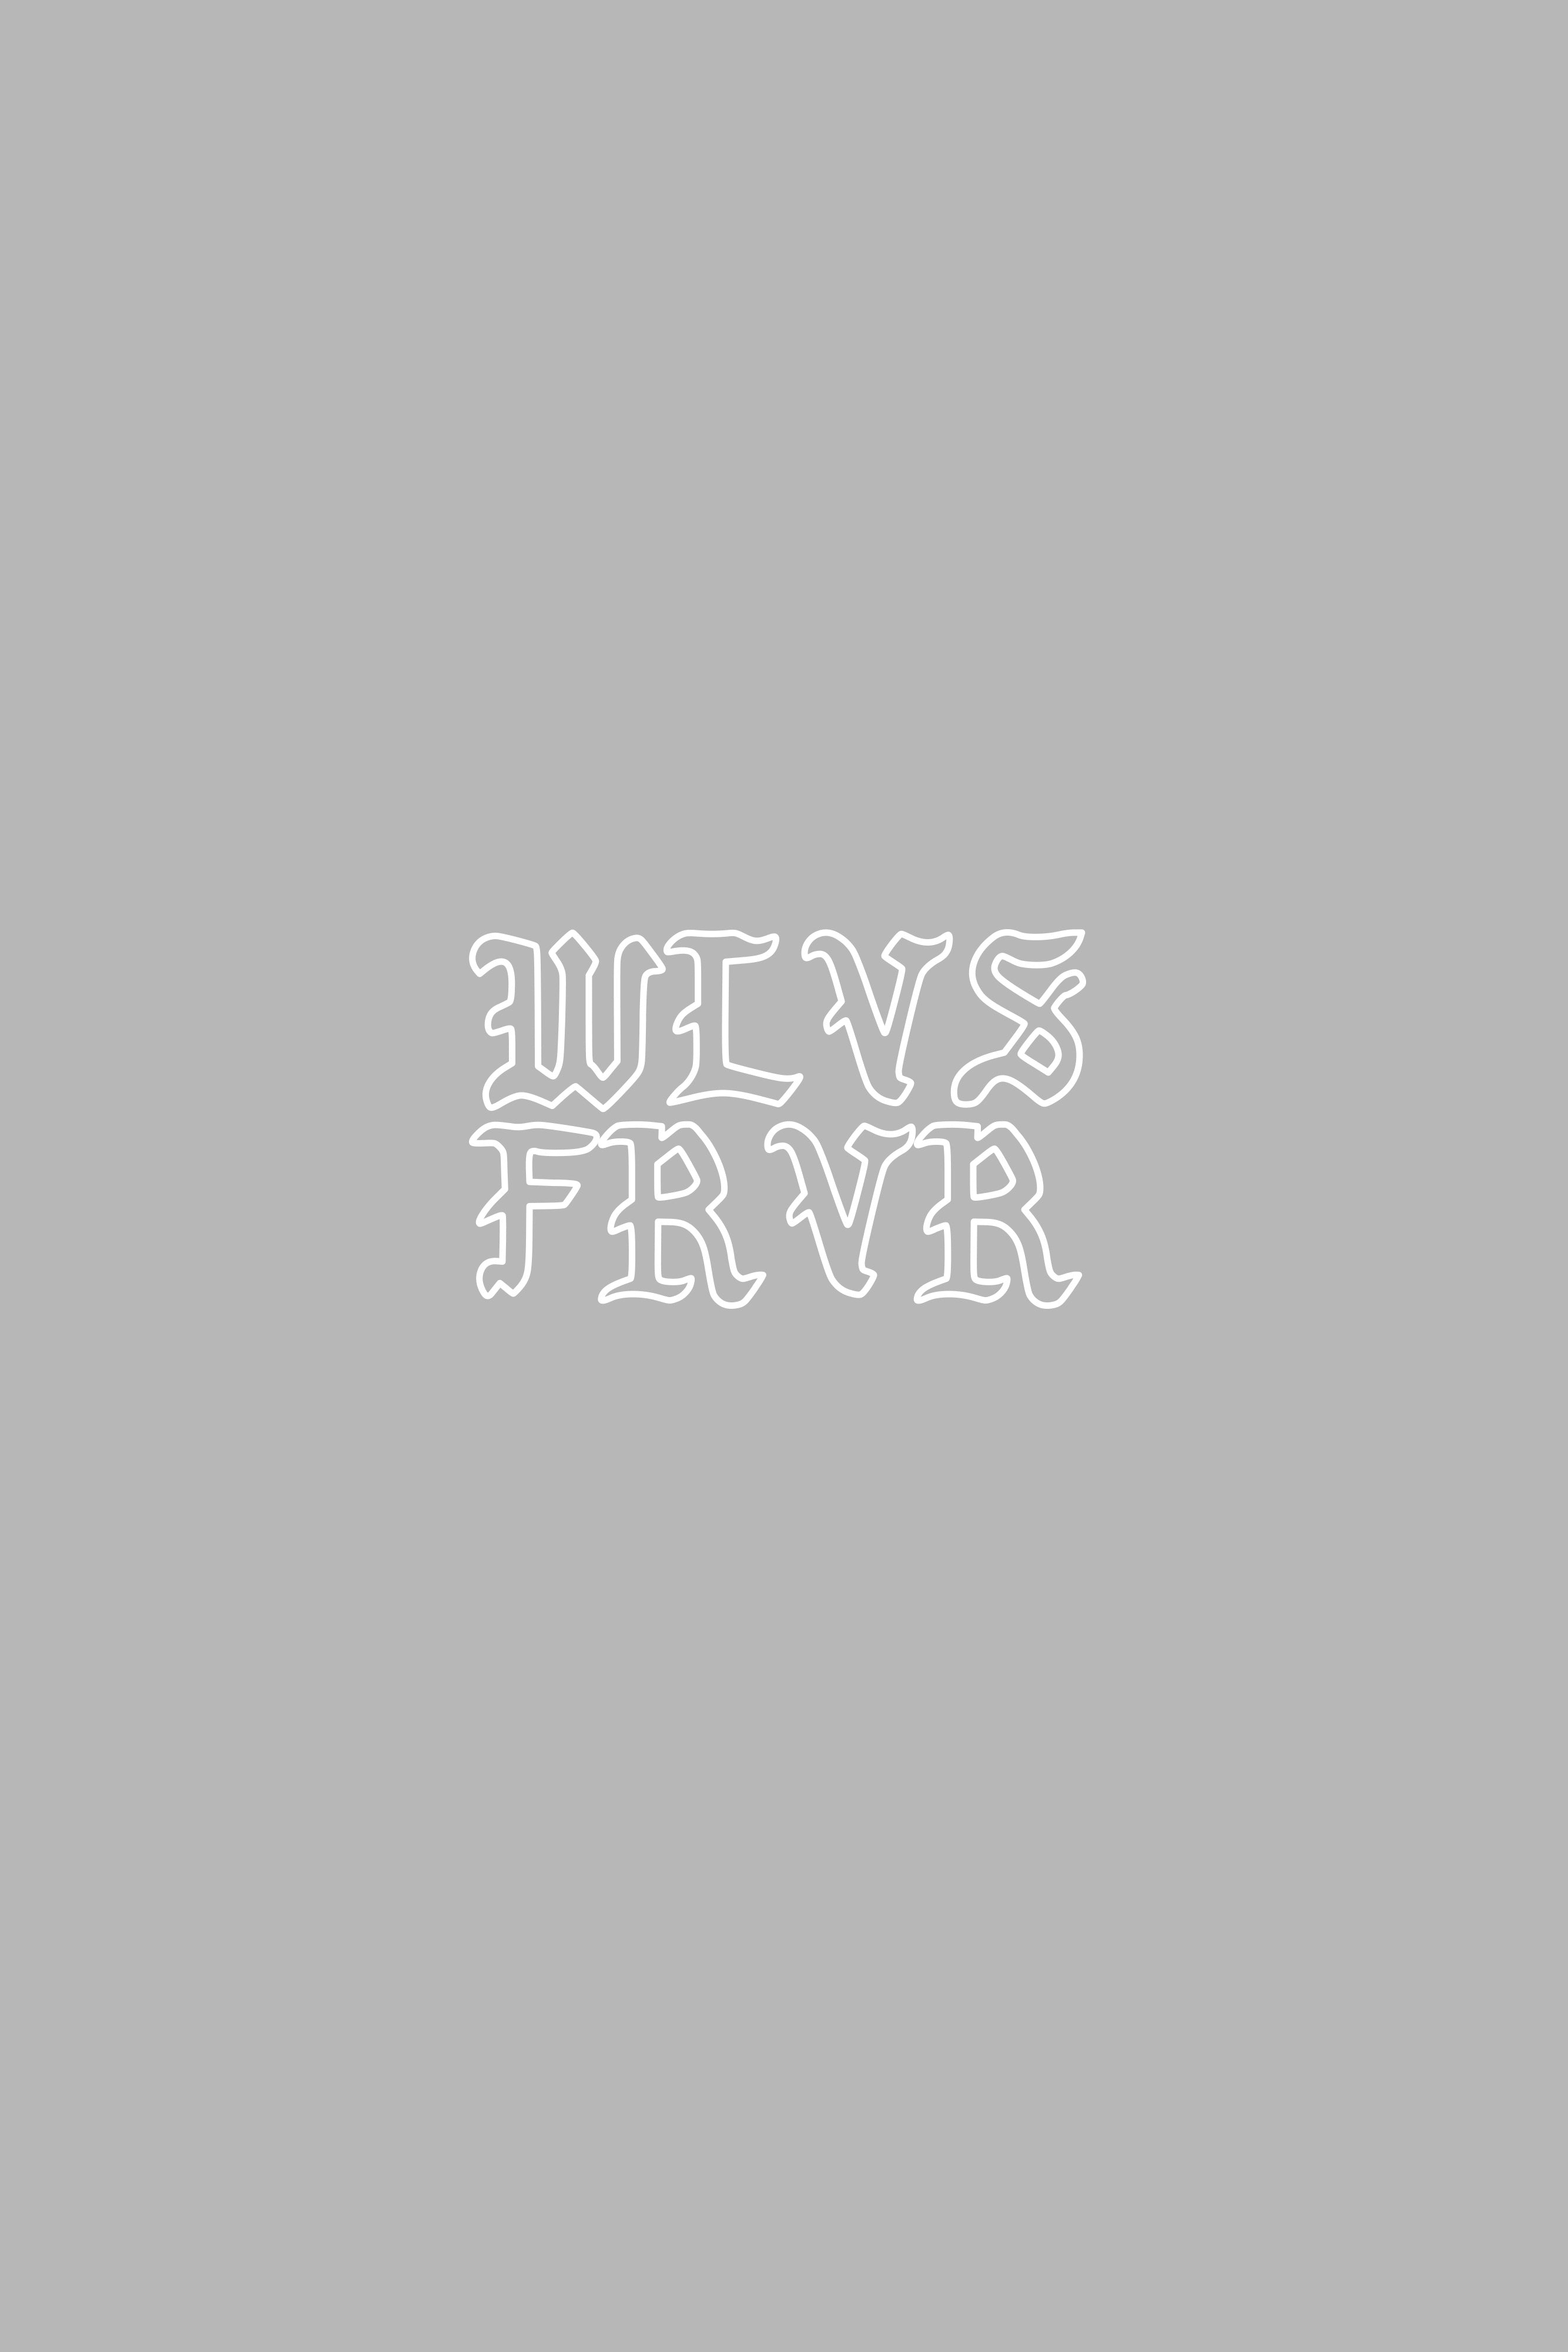 WLVS FRVR Decal Sticker In White